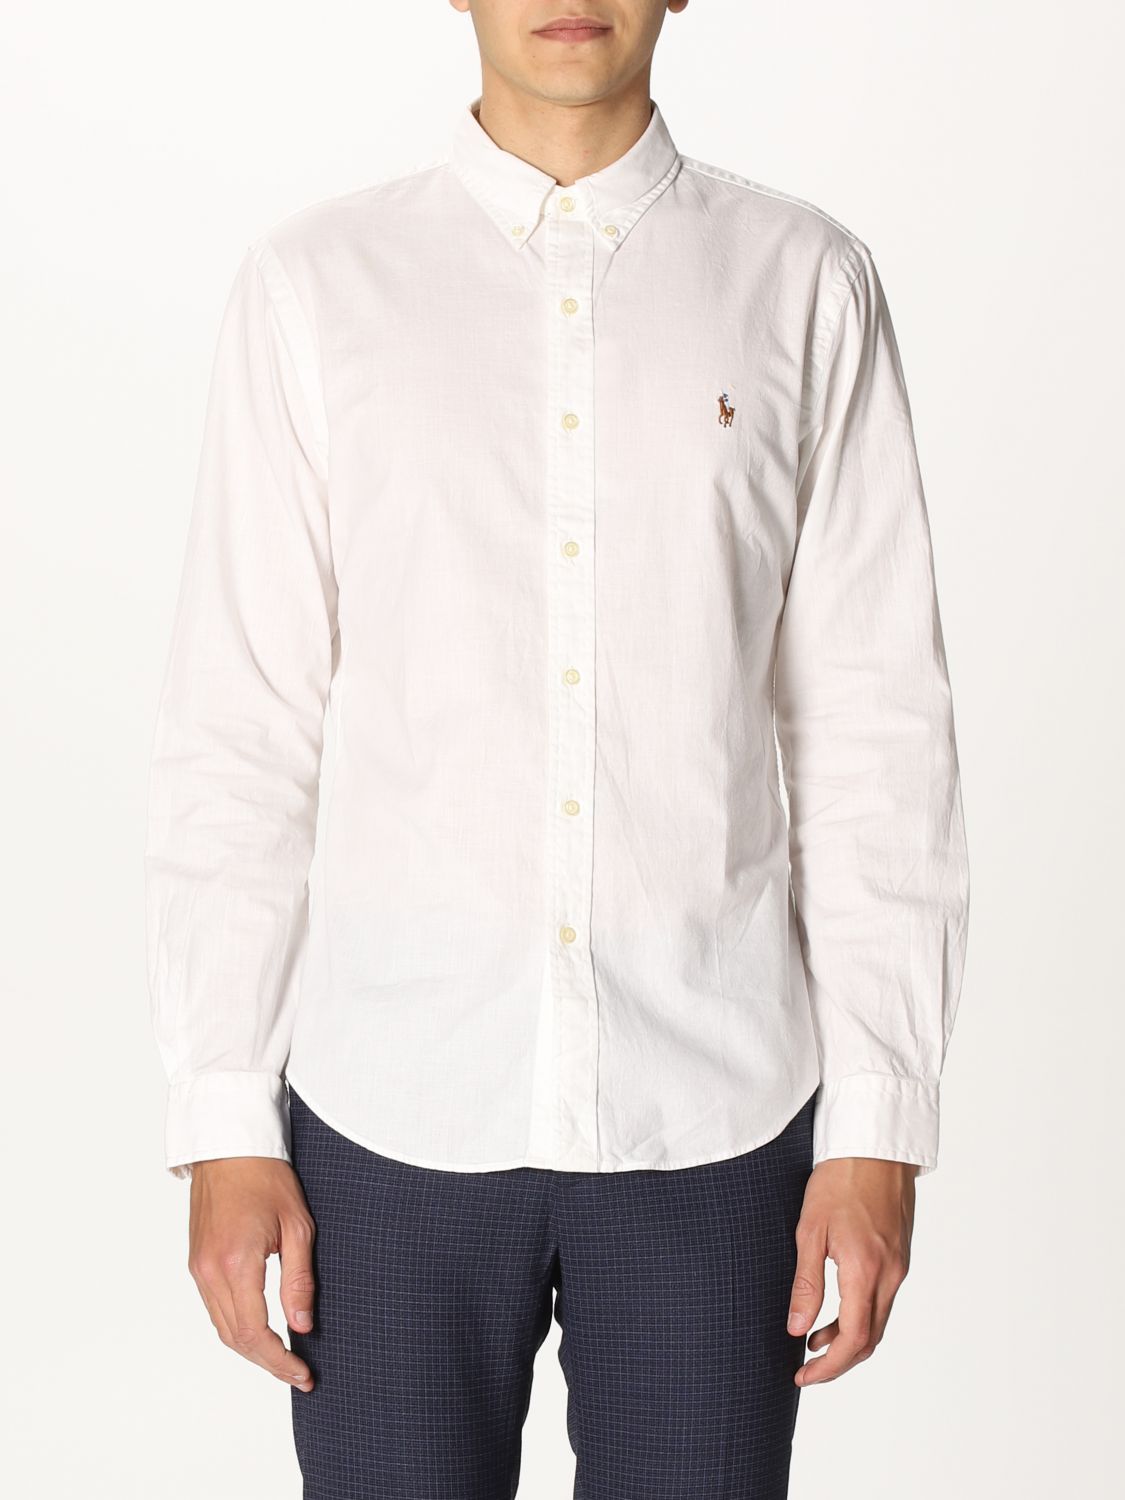 POLO RALPH LAUREN: shirt with button down collar - White | Shirt Polo ...